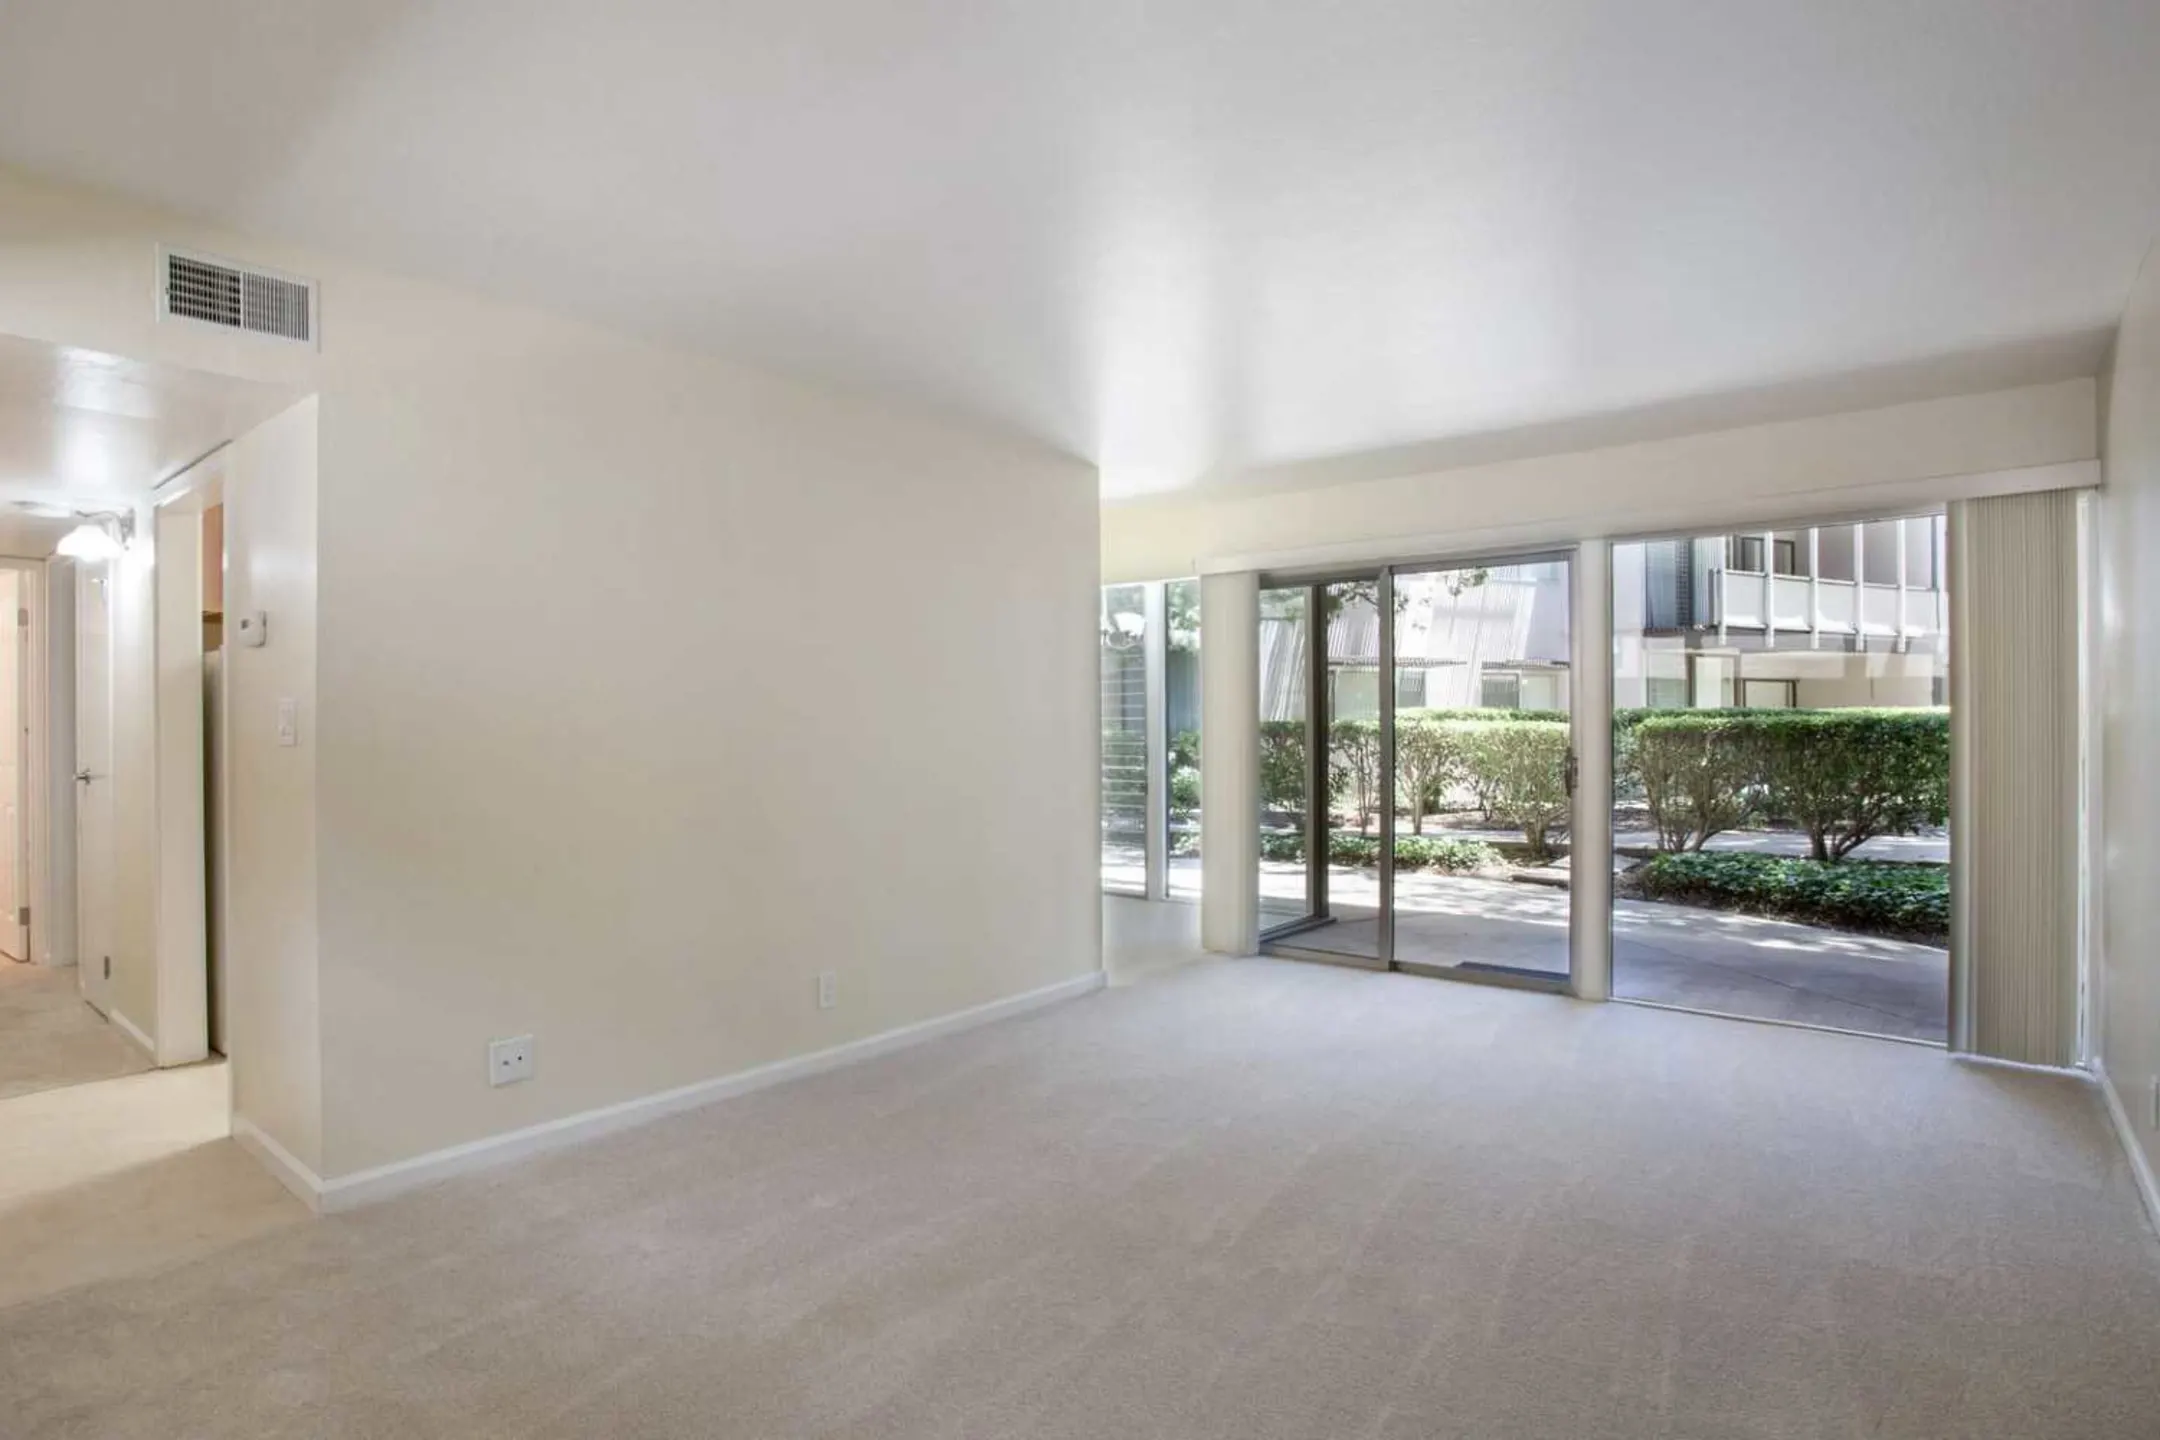 Living Room - Parksquare Apartments - Palo Alto, CA